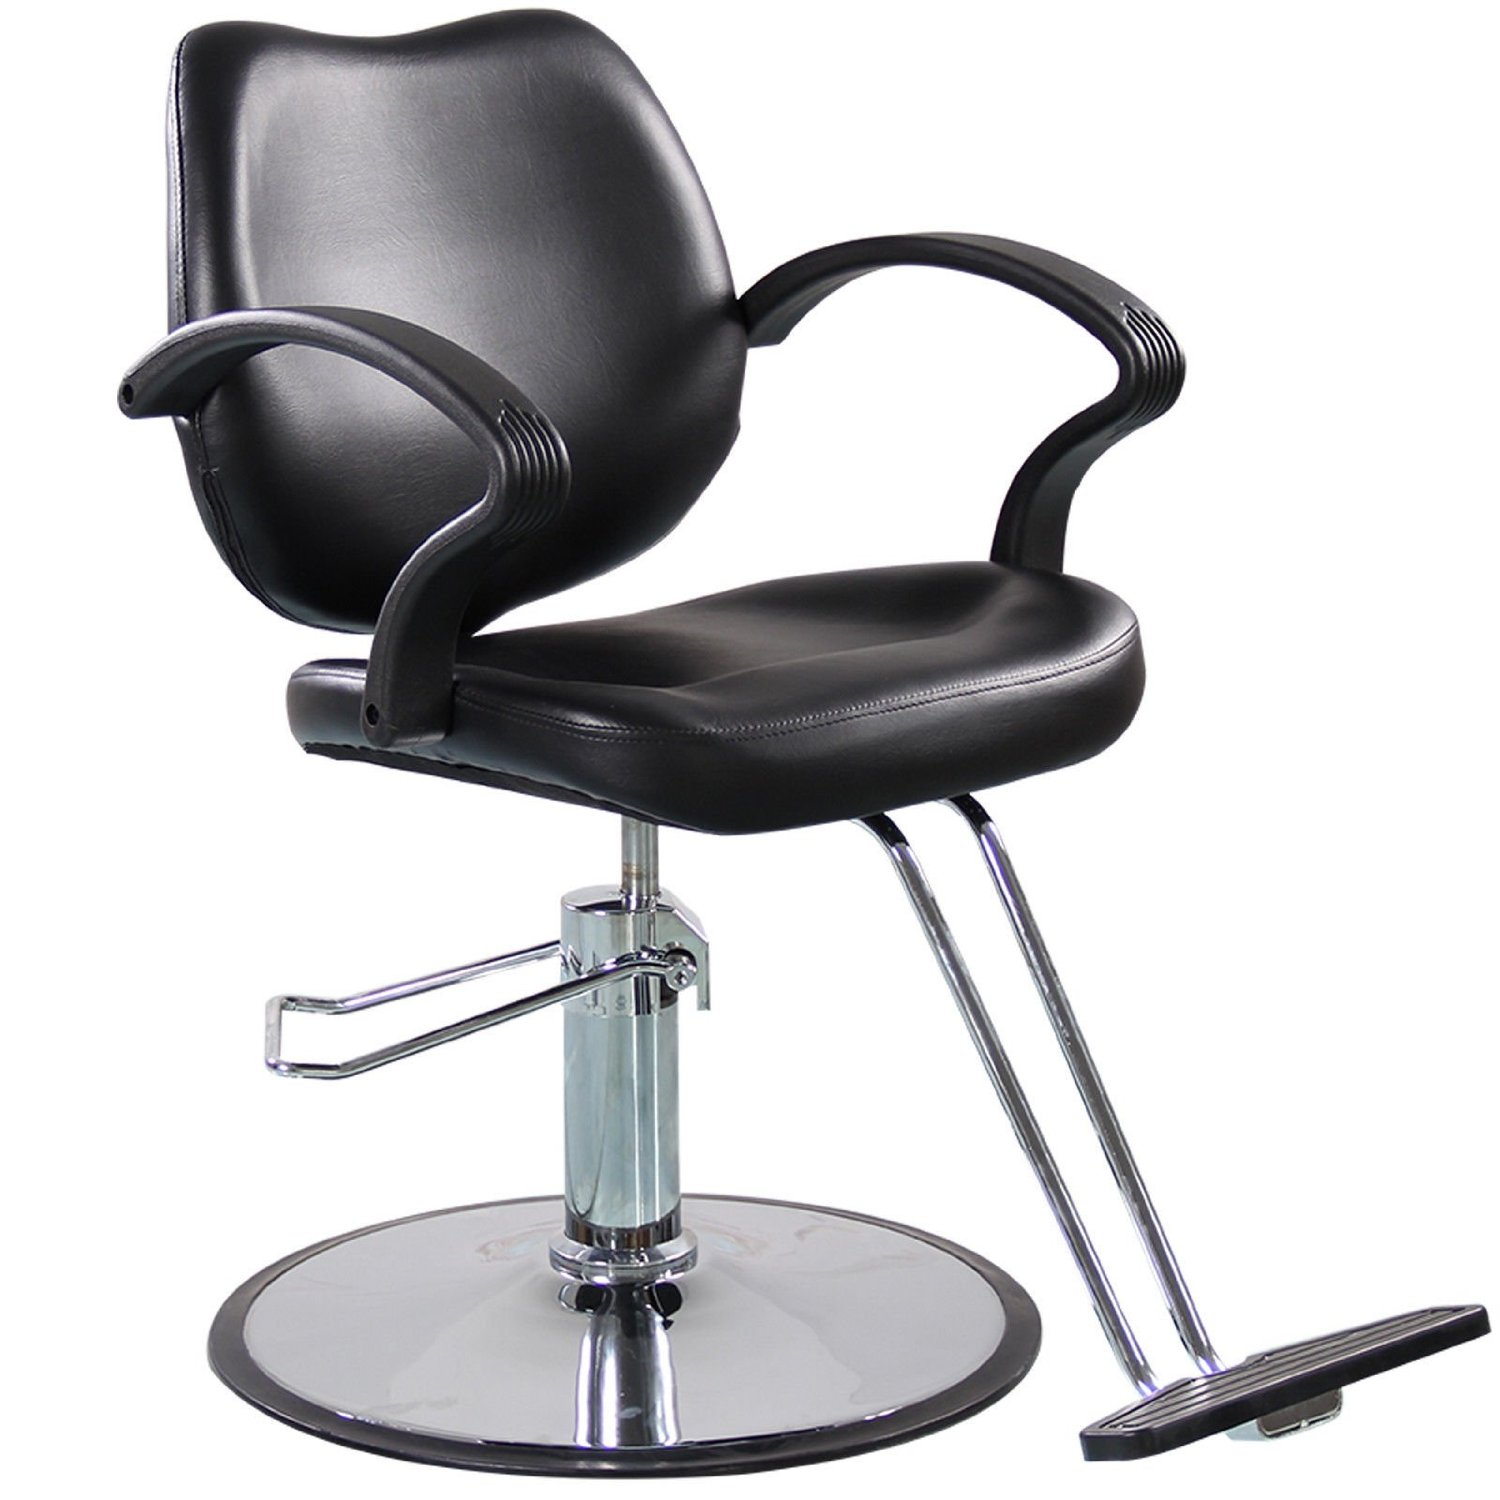 Eastmagic Barber Styling Chair Salon Equipment